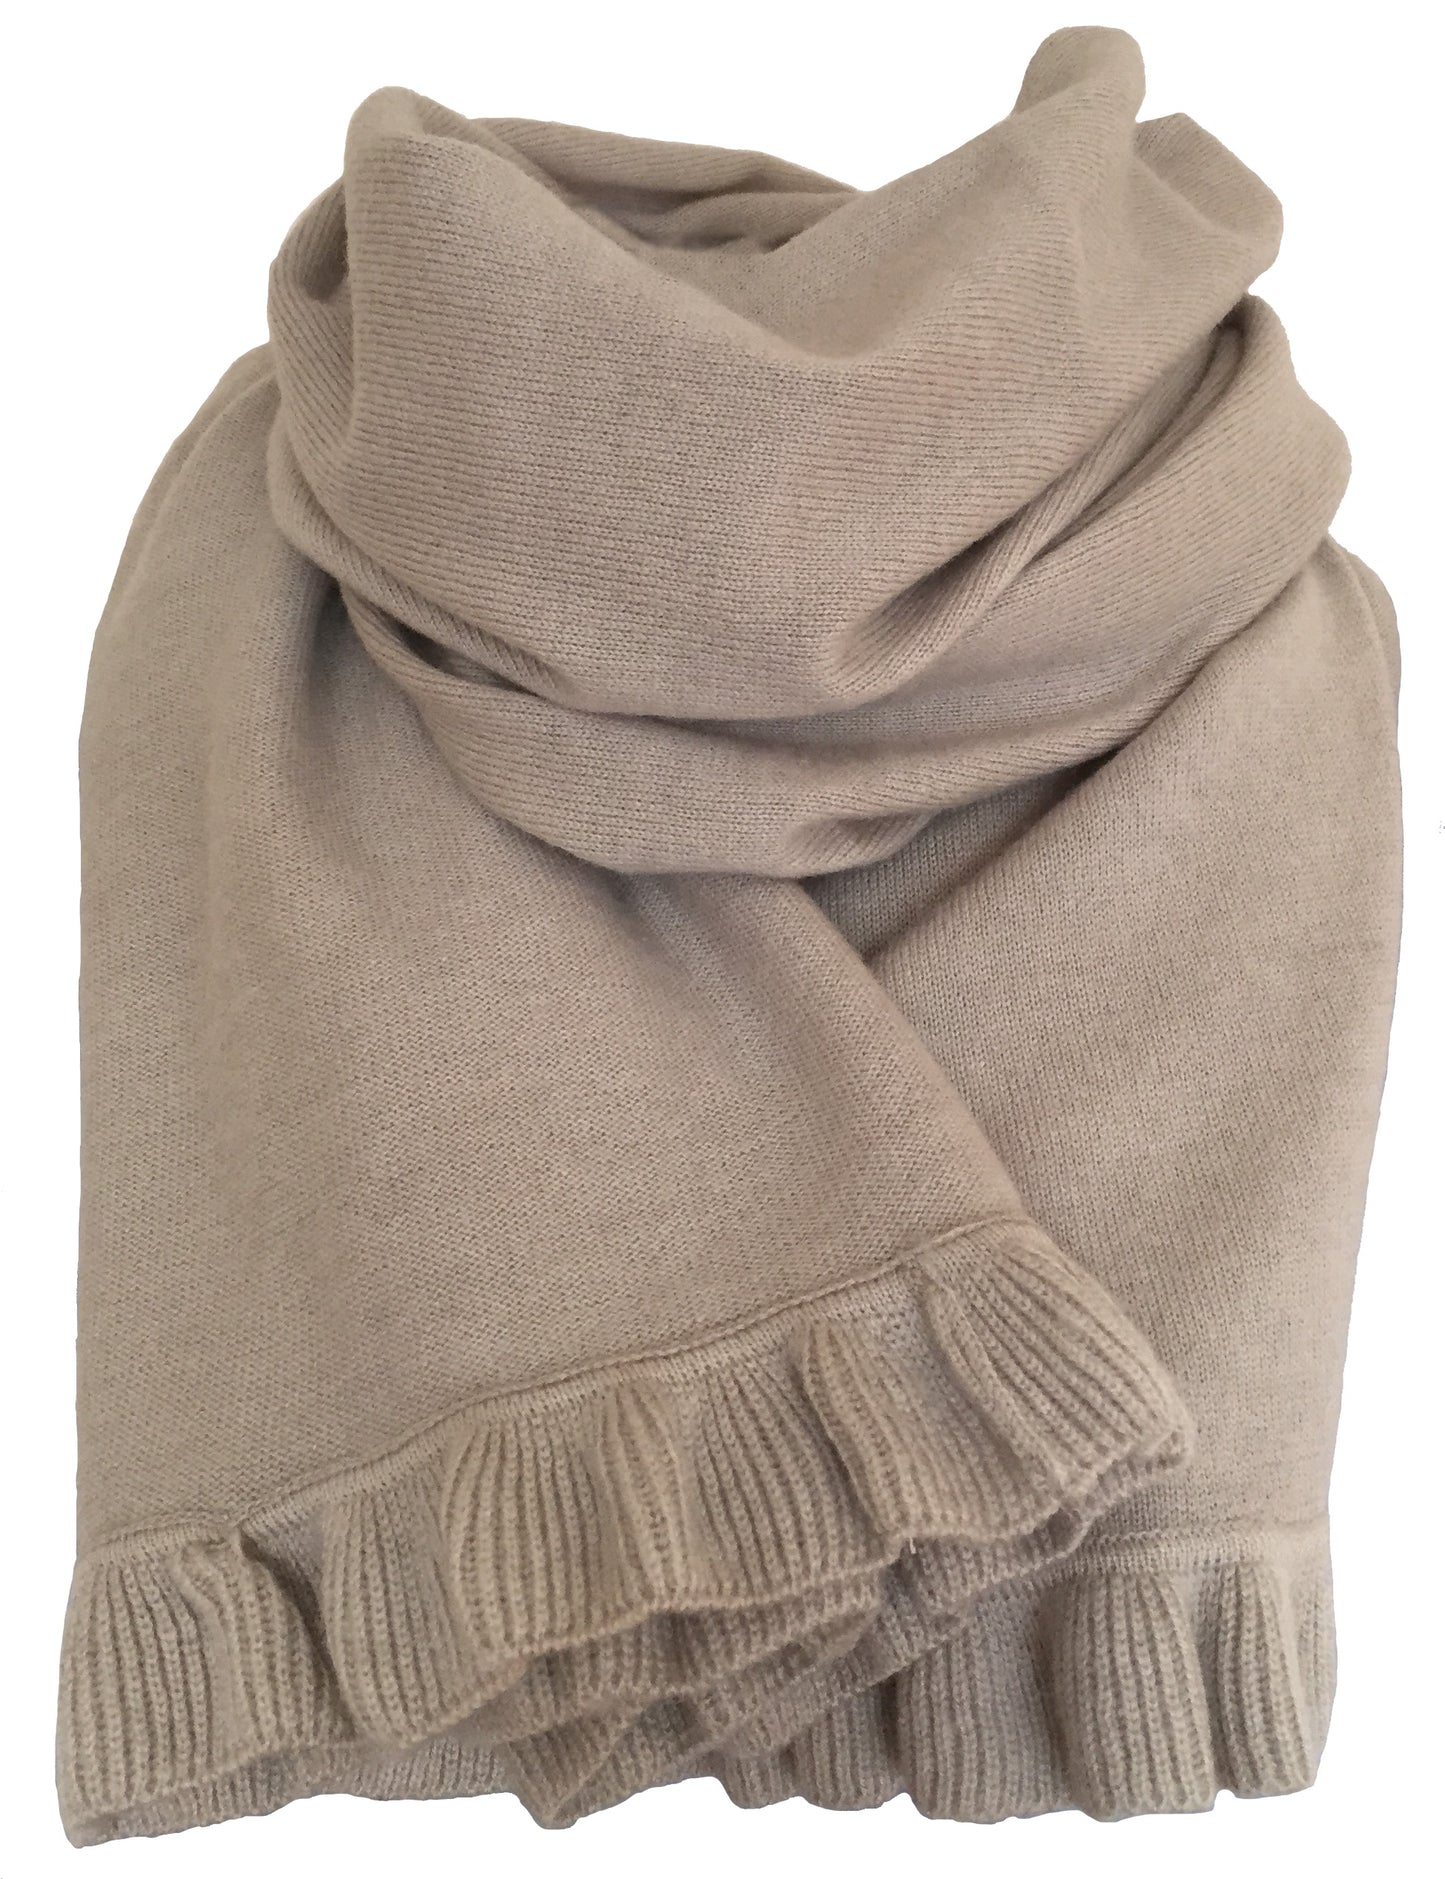 Cashmere scarf/shawl with ruffled edge